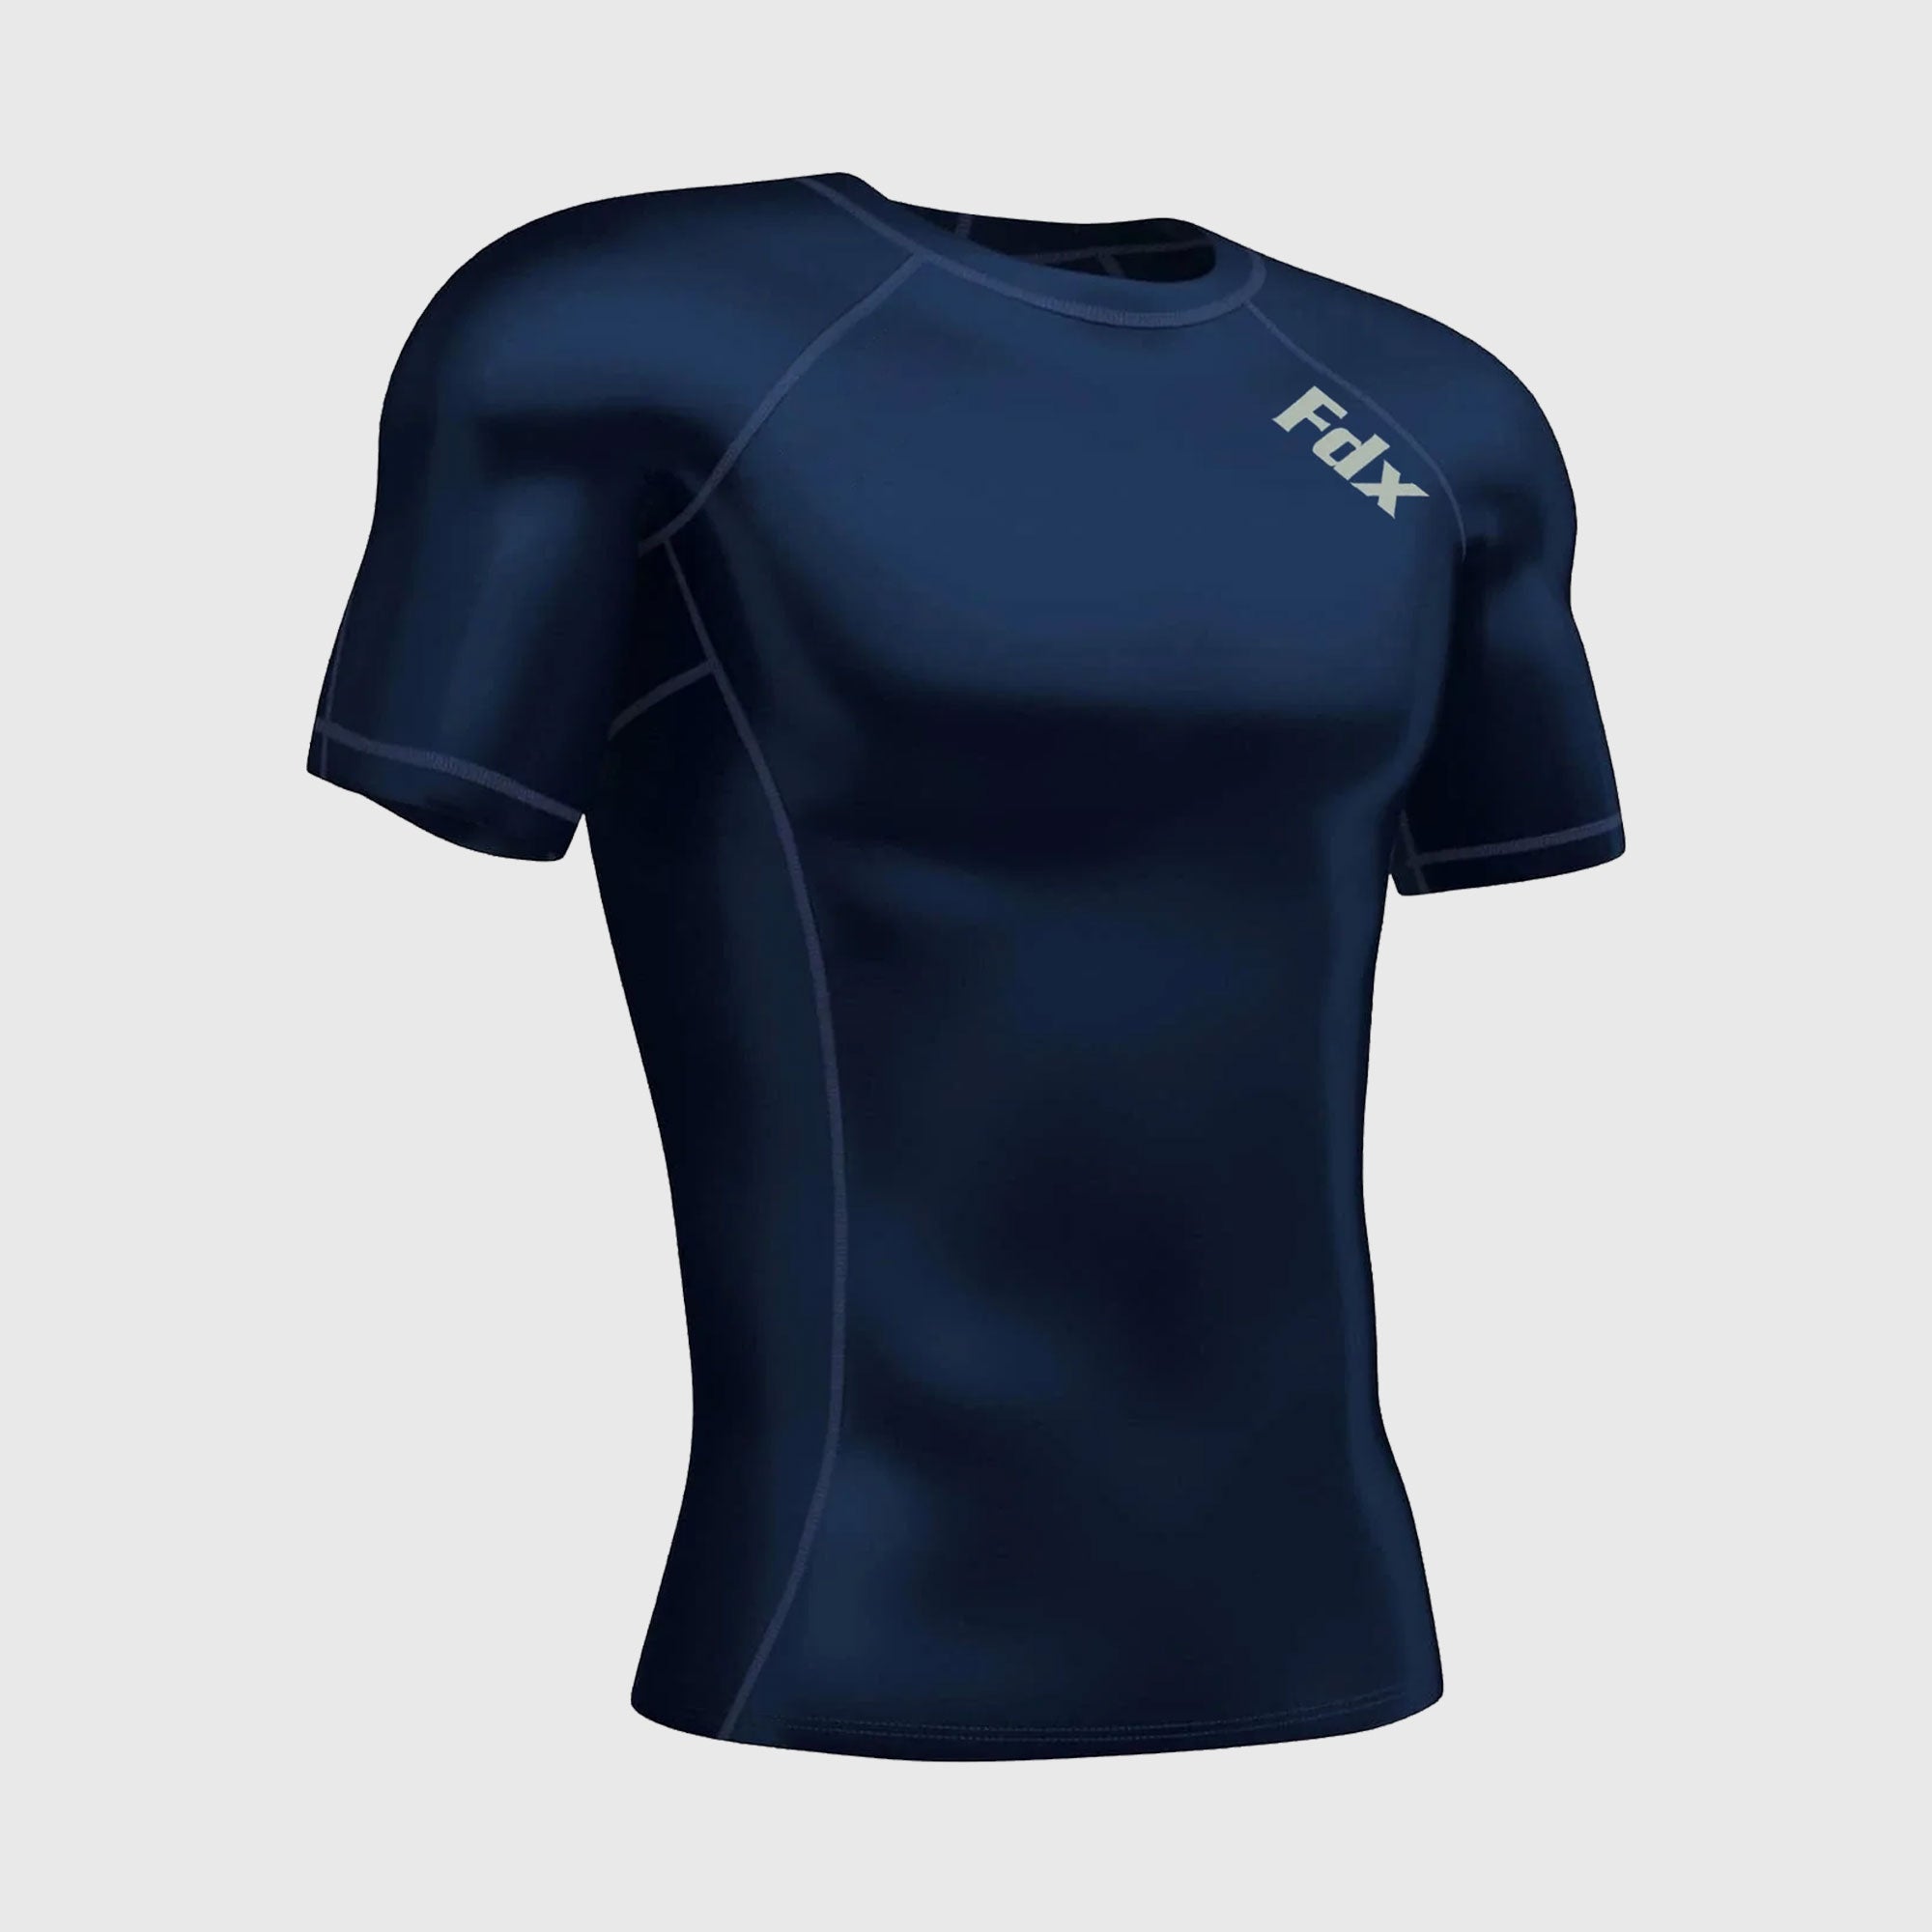 Fdx Cosmic Navy Blue Men's Short Sleeve Base Layer Gym Shirt